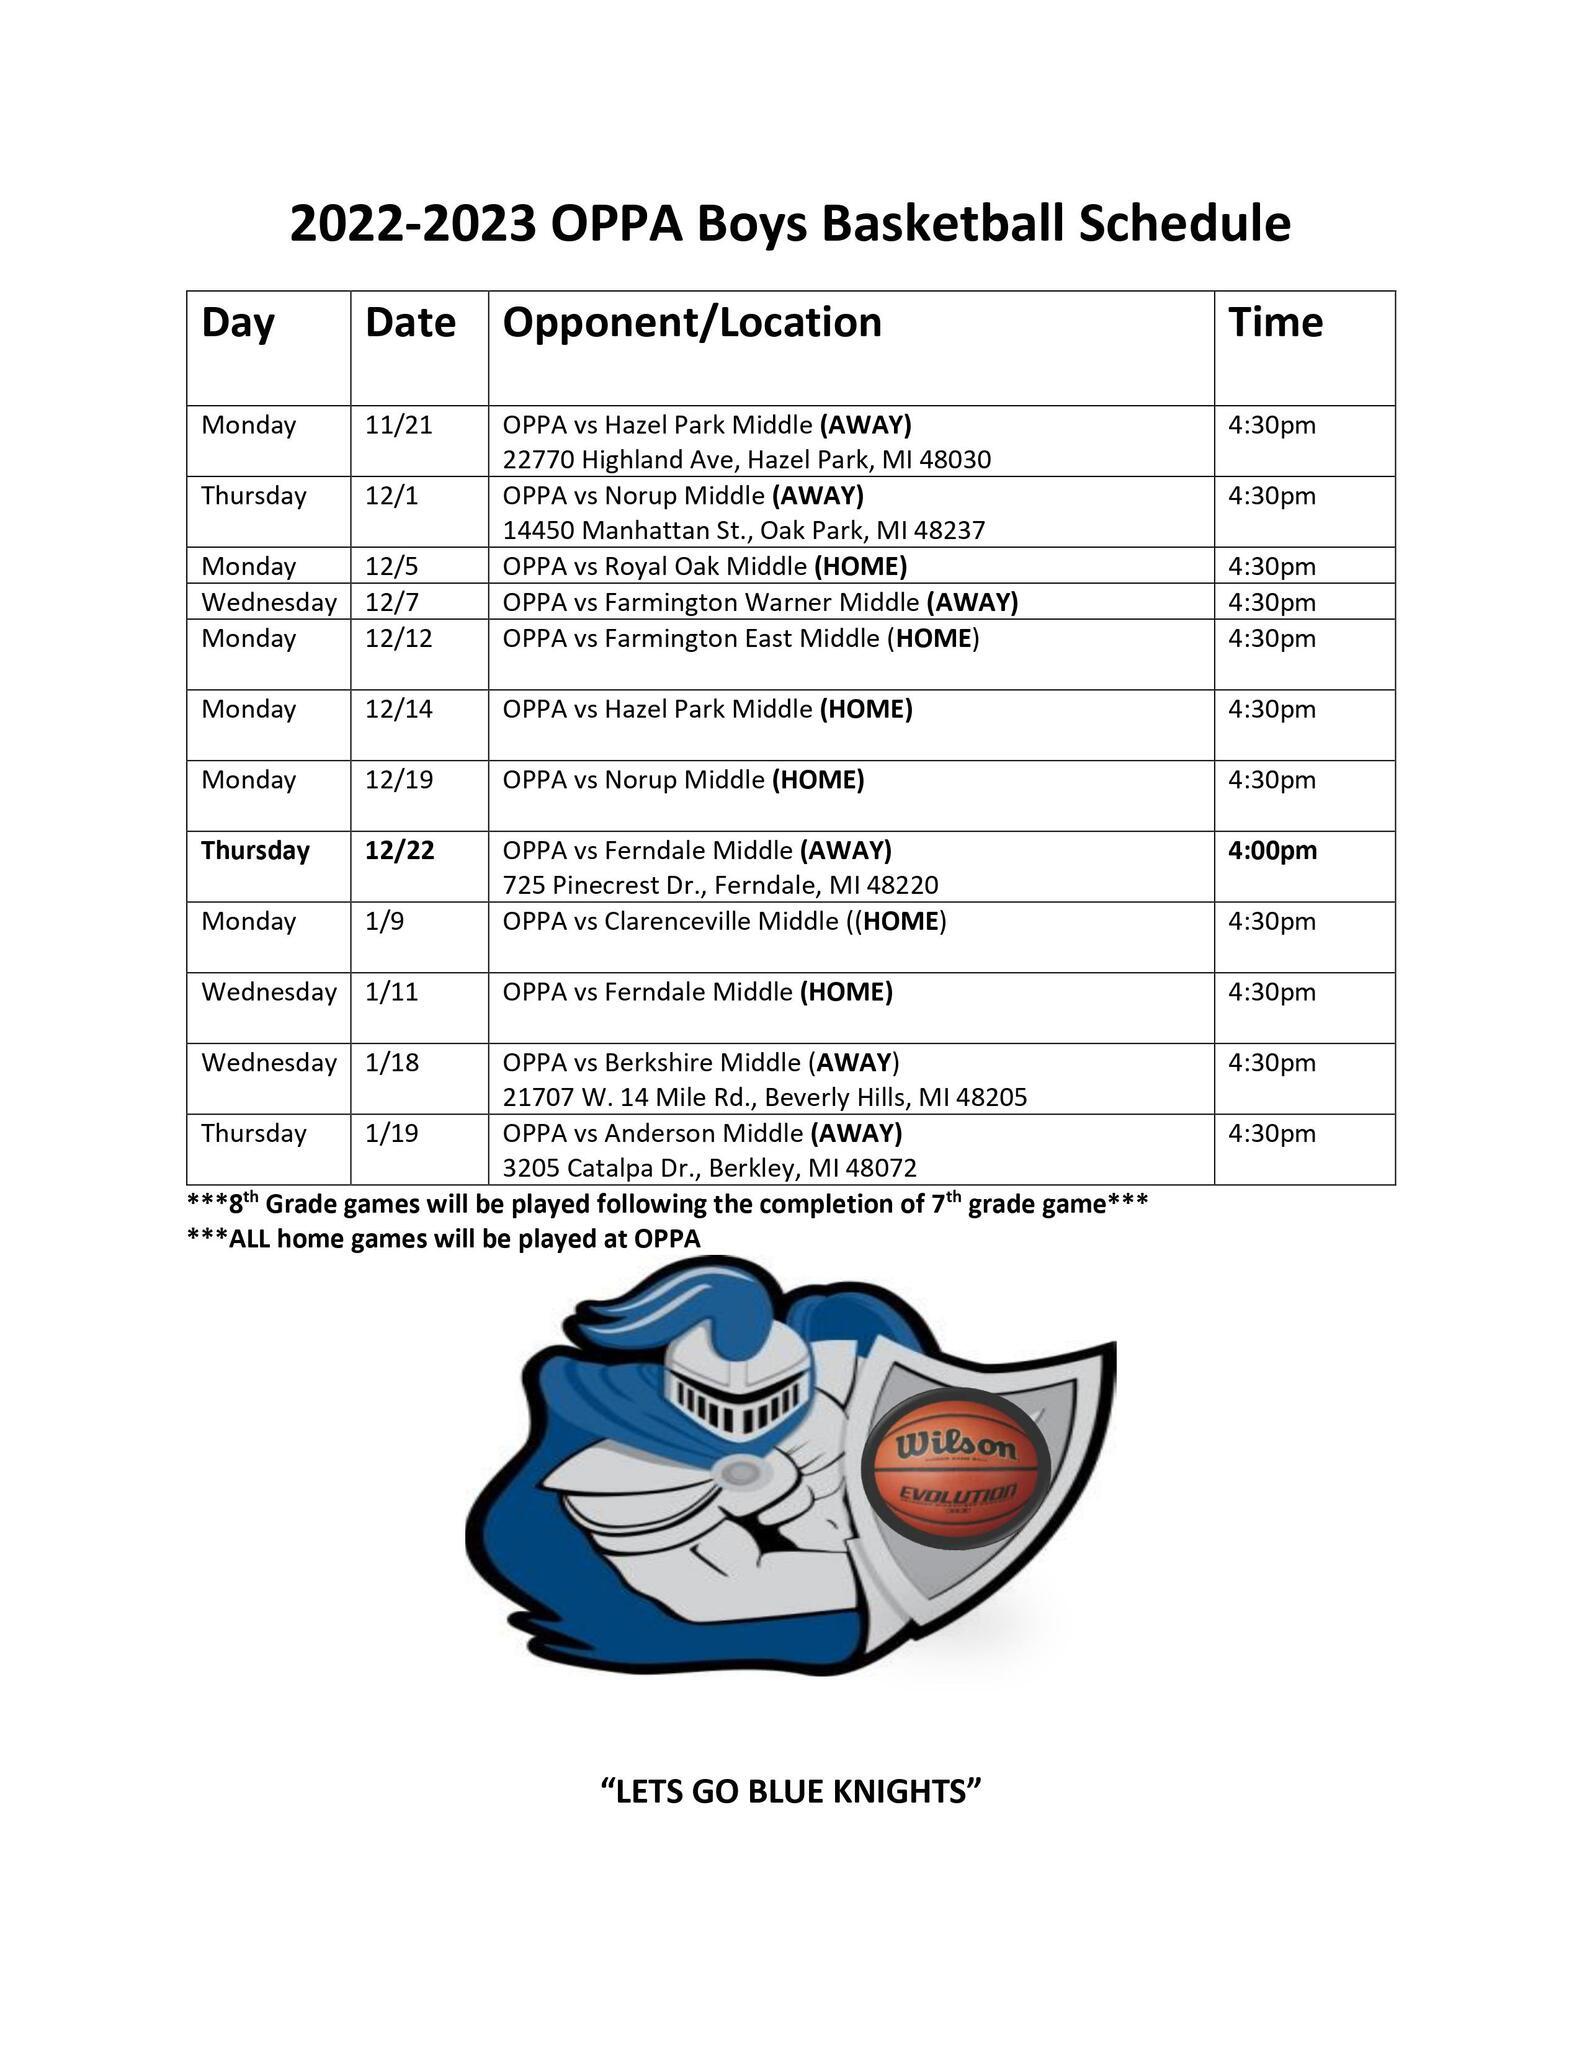 Boys basketball schedule 